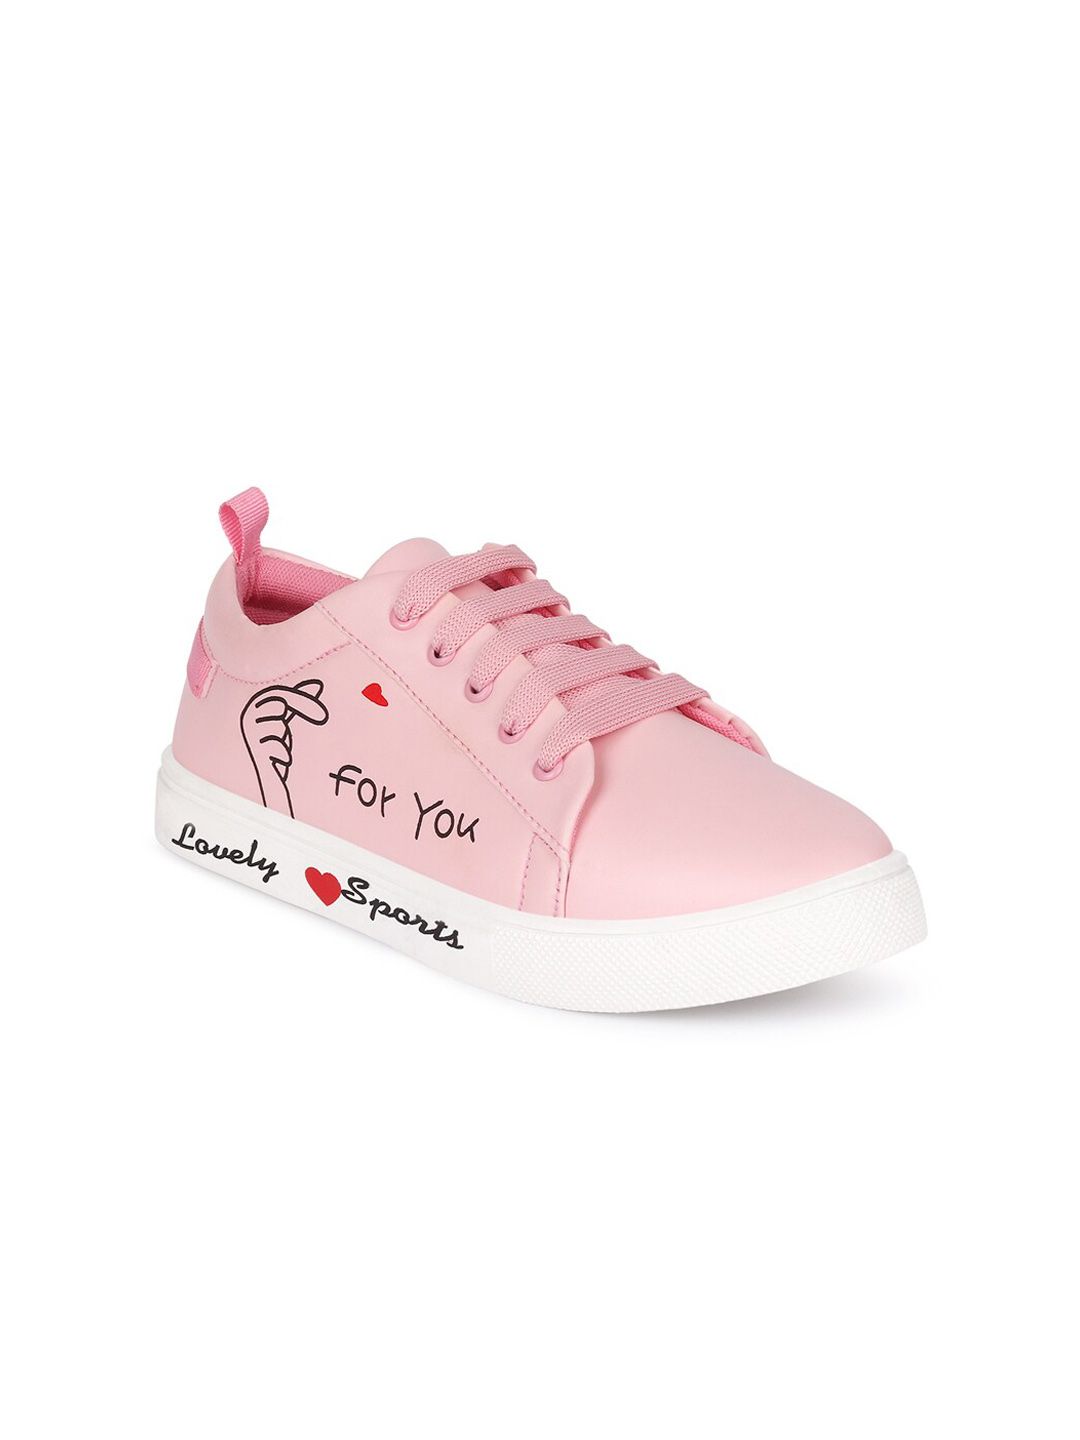 Longwalk Women Pink Printed Casual Sneakers Price in India